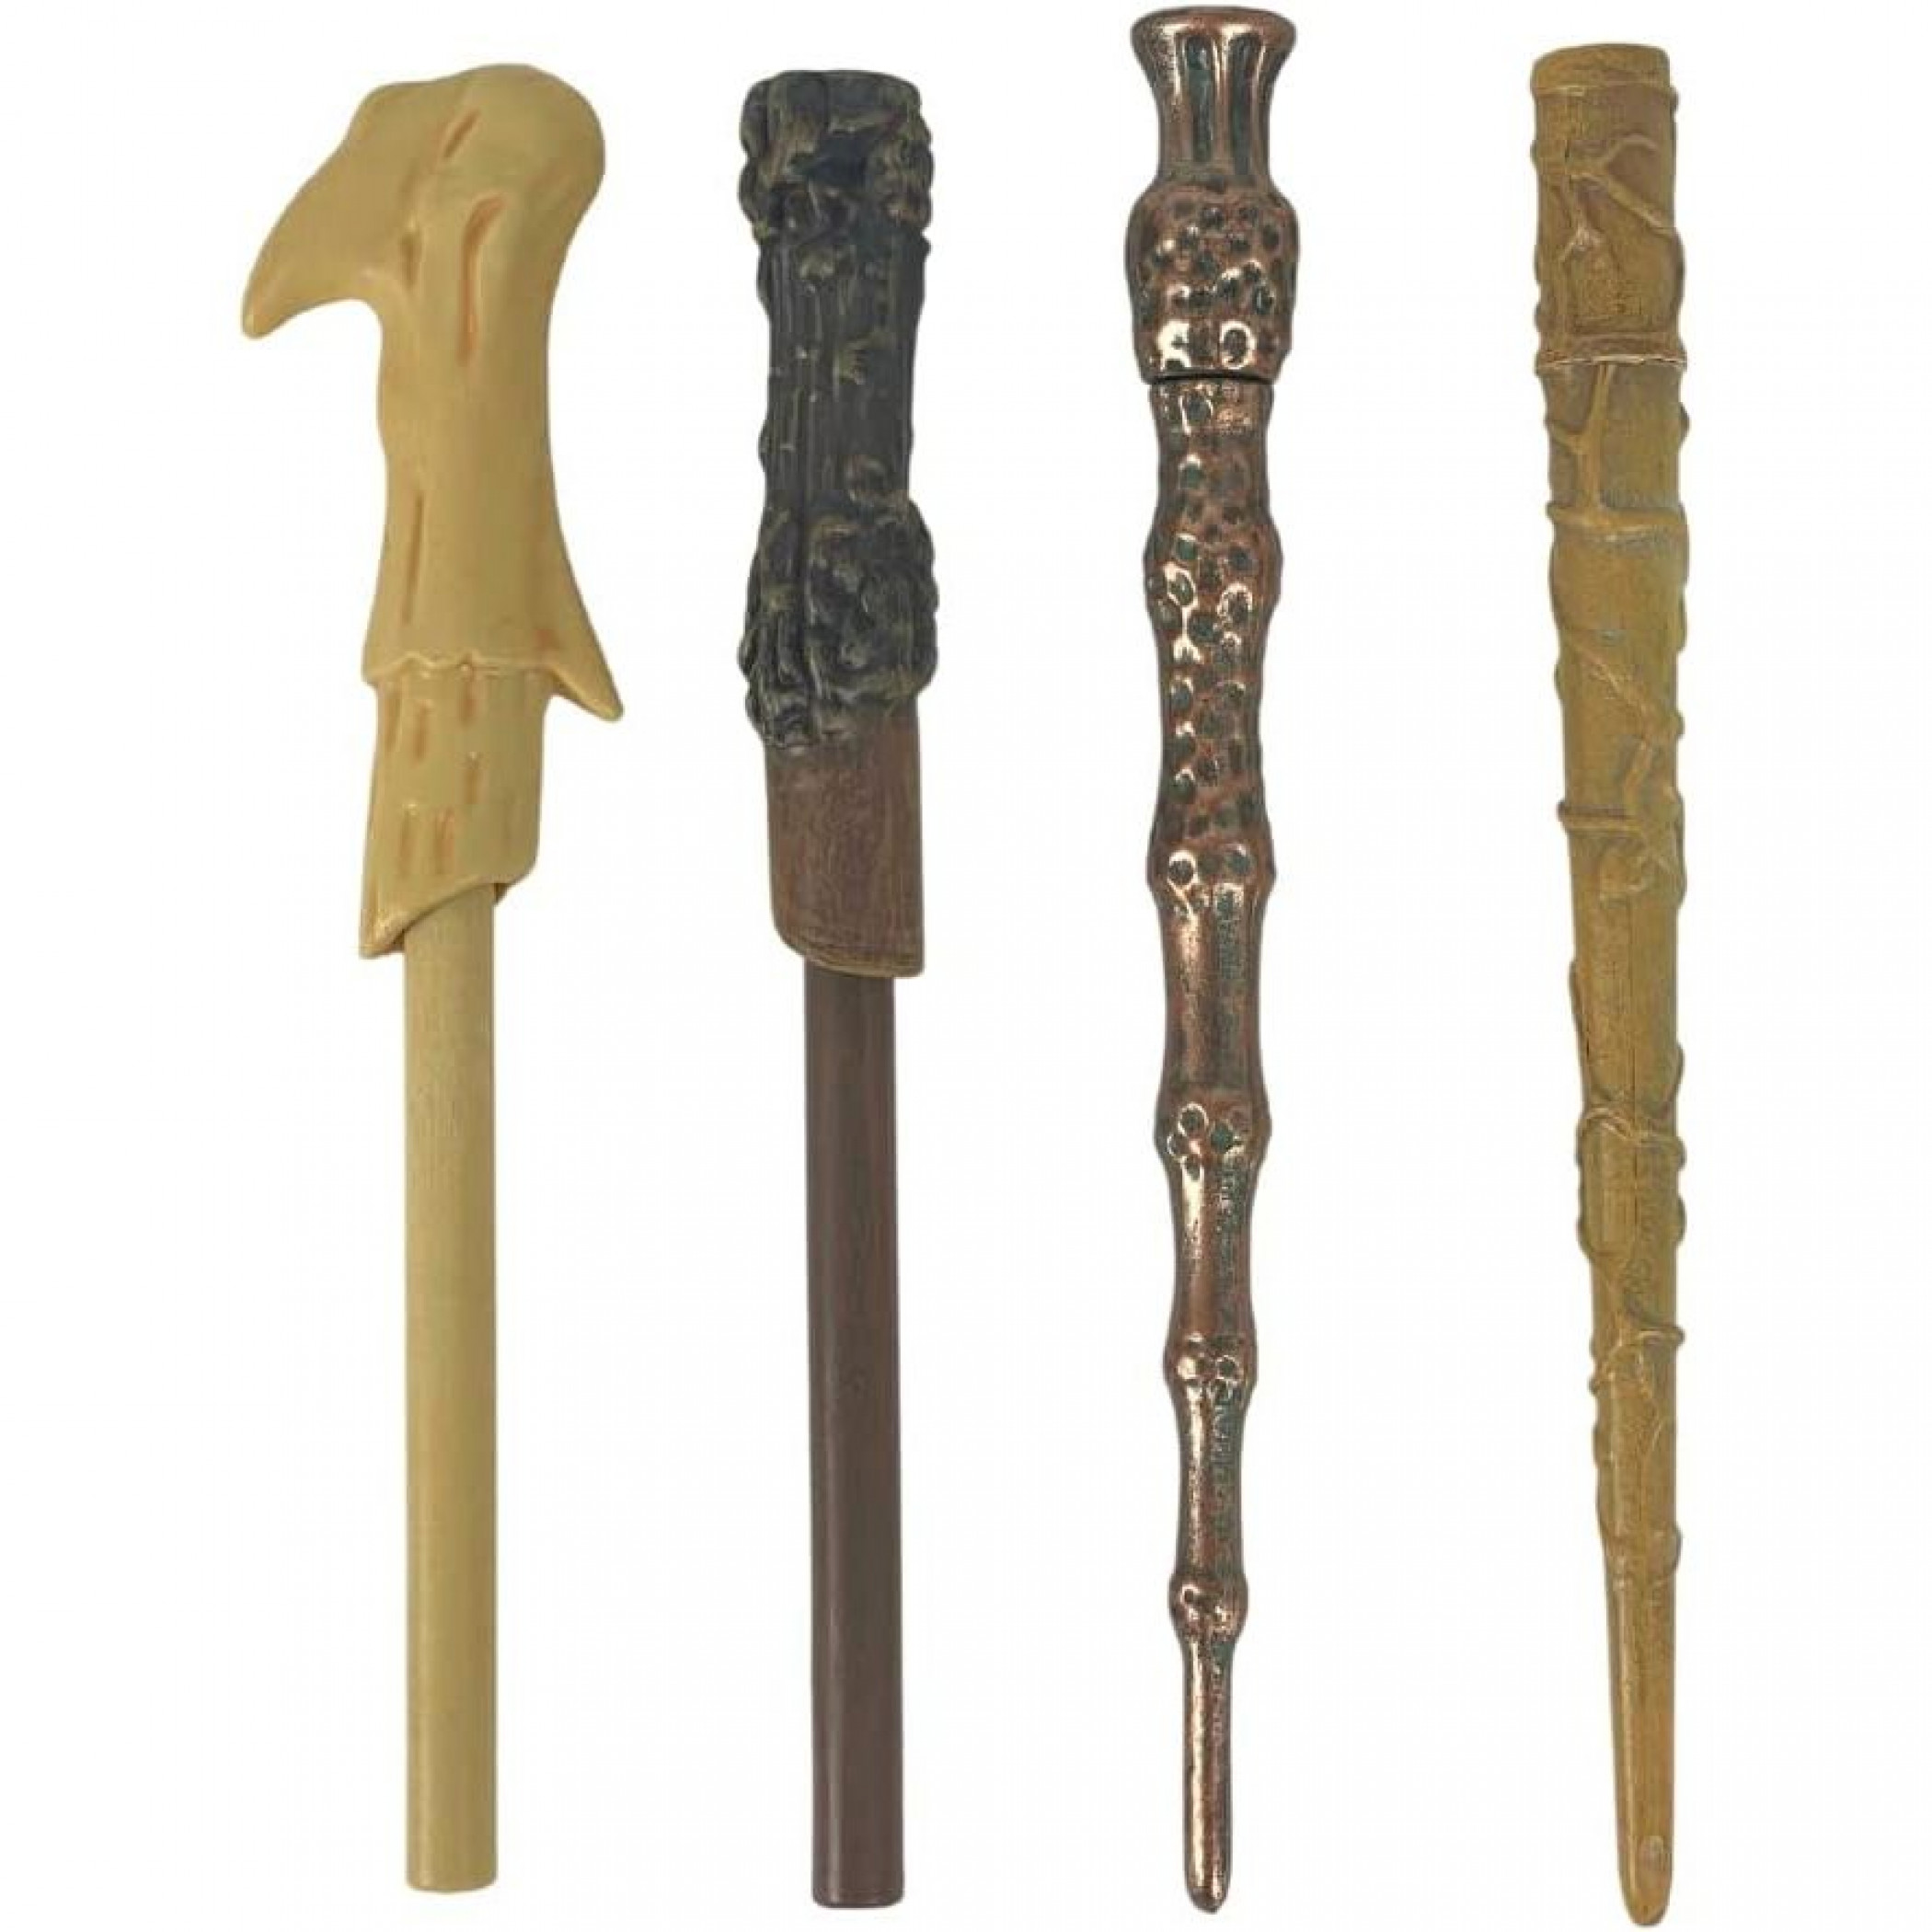 Harry Potter Wizarding Wand Pens Set of 4 - Harry Potter, Voldemort, Hermione, Dumbledore Wand Pens